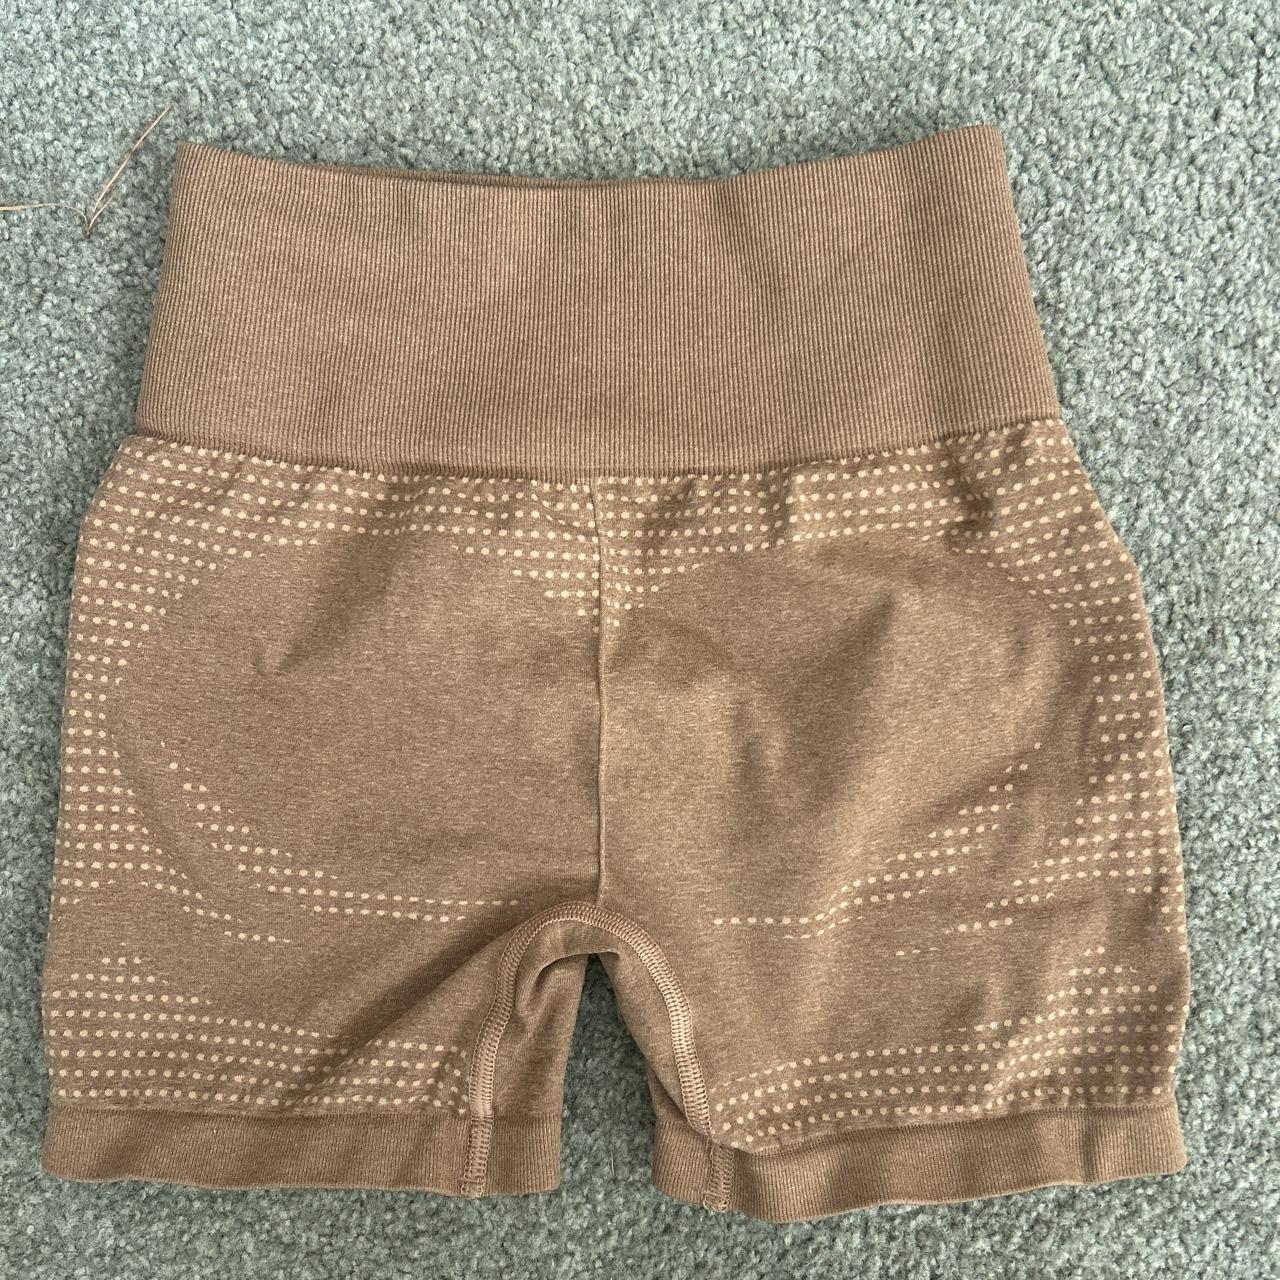 Gym Shark vital seamless shorts in fawn brown XS - Depop